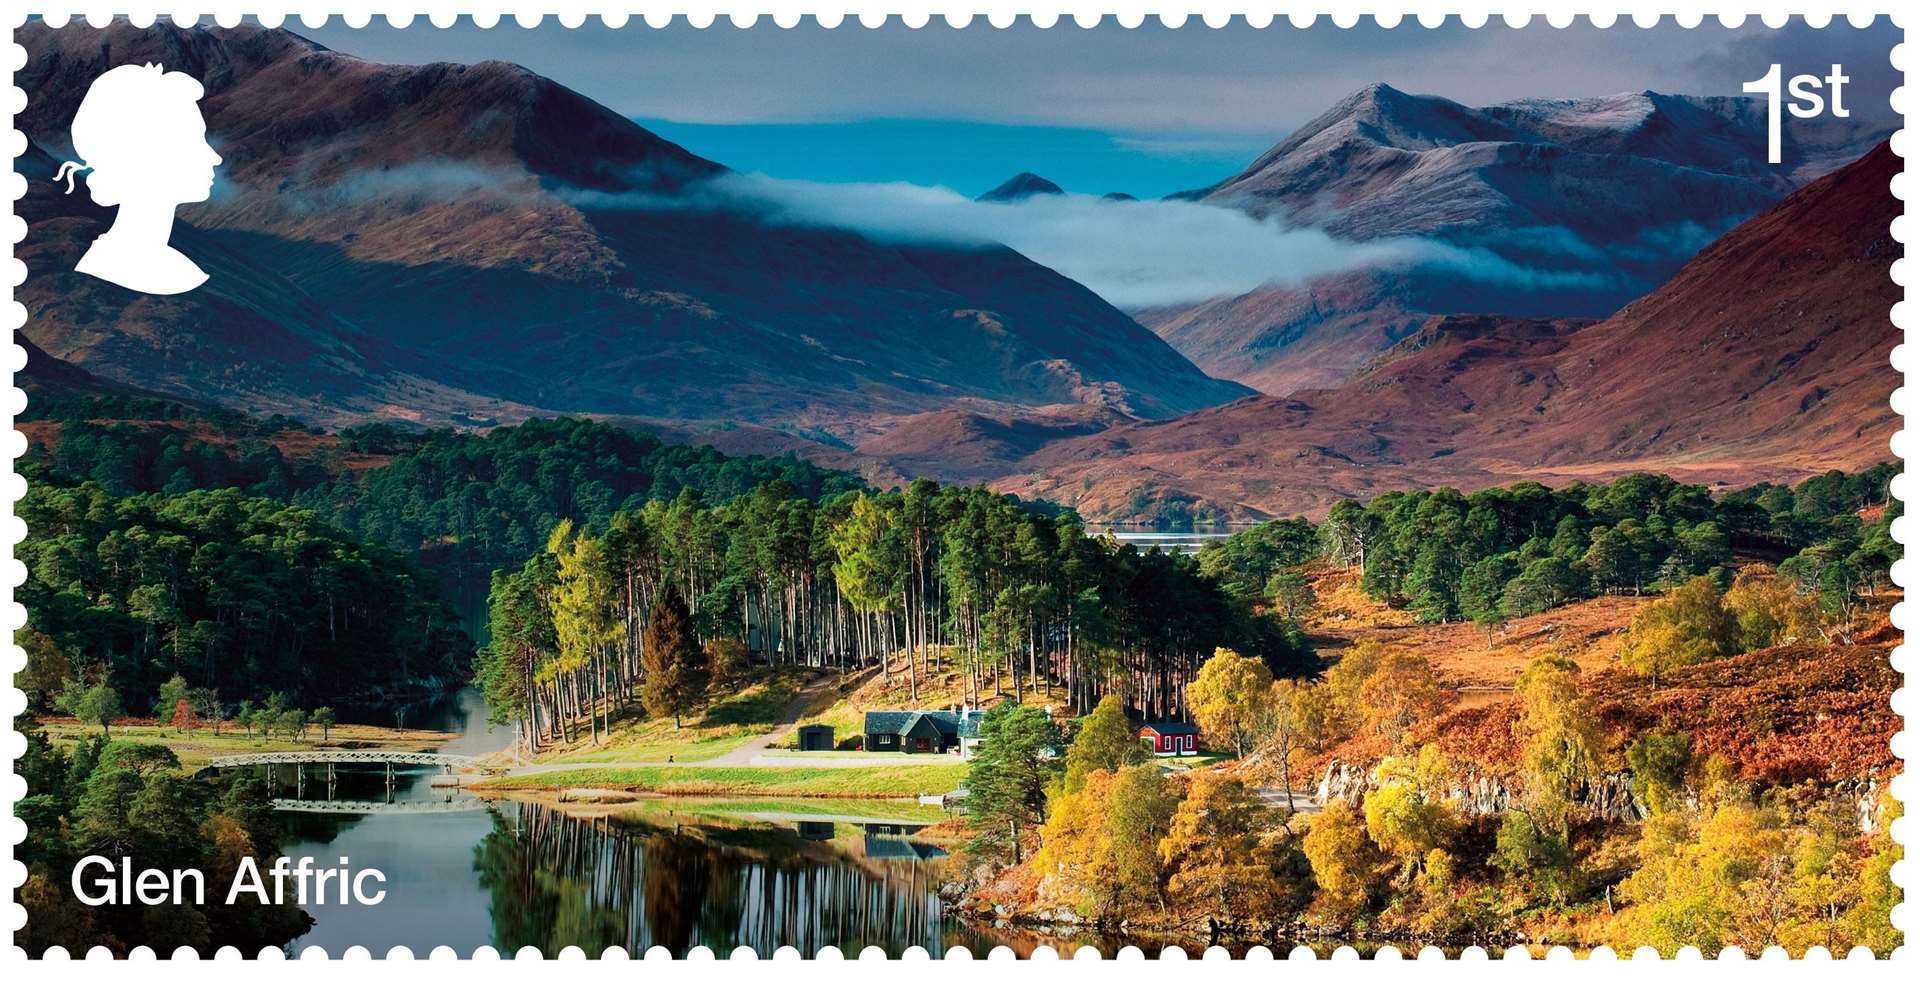 The Glen Affric stamp.